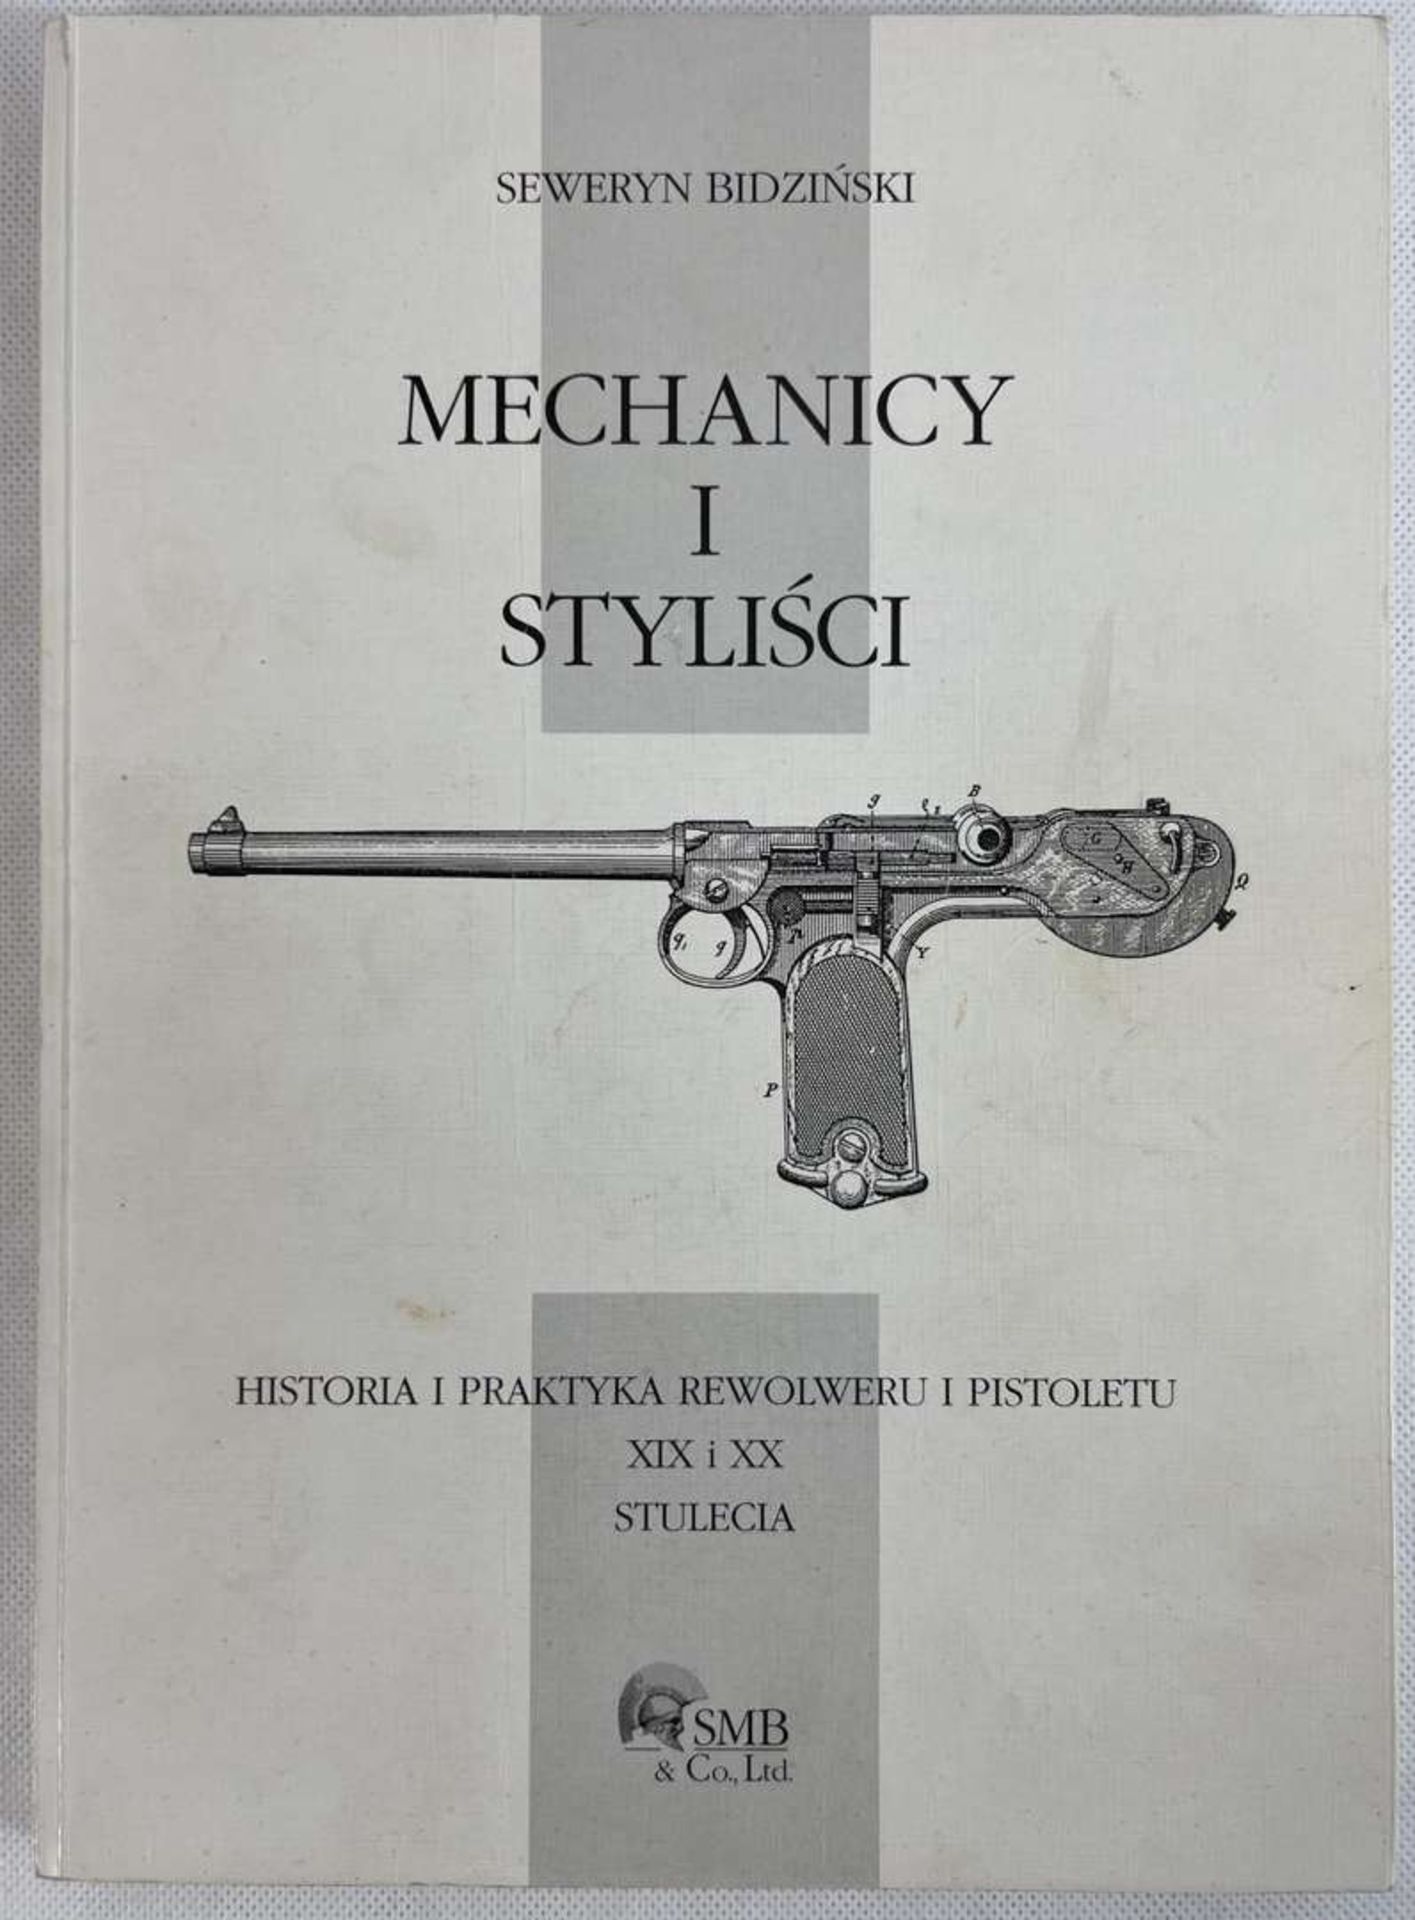 Polish Collectors Book on Revolvers & Pistols - Bidziński